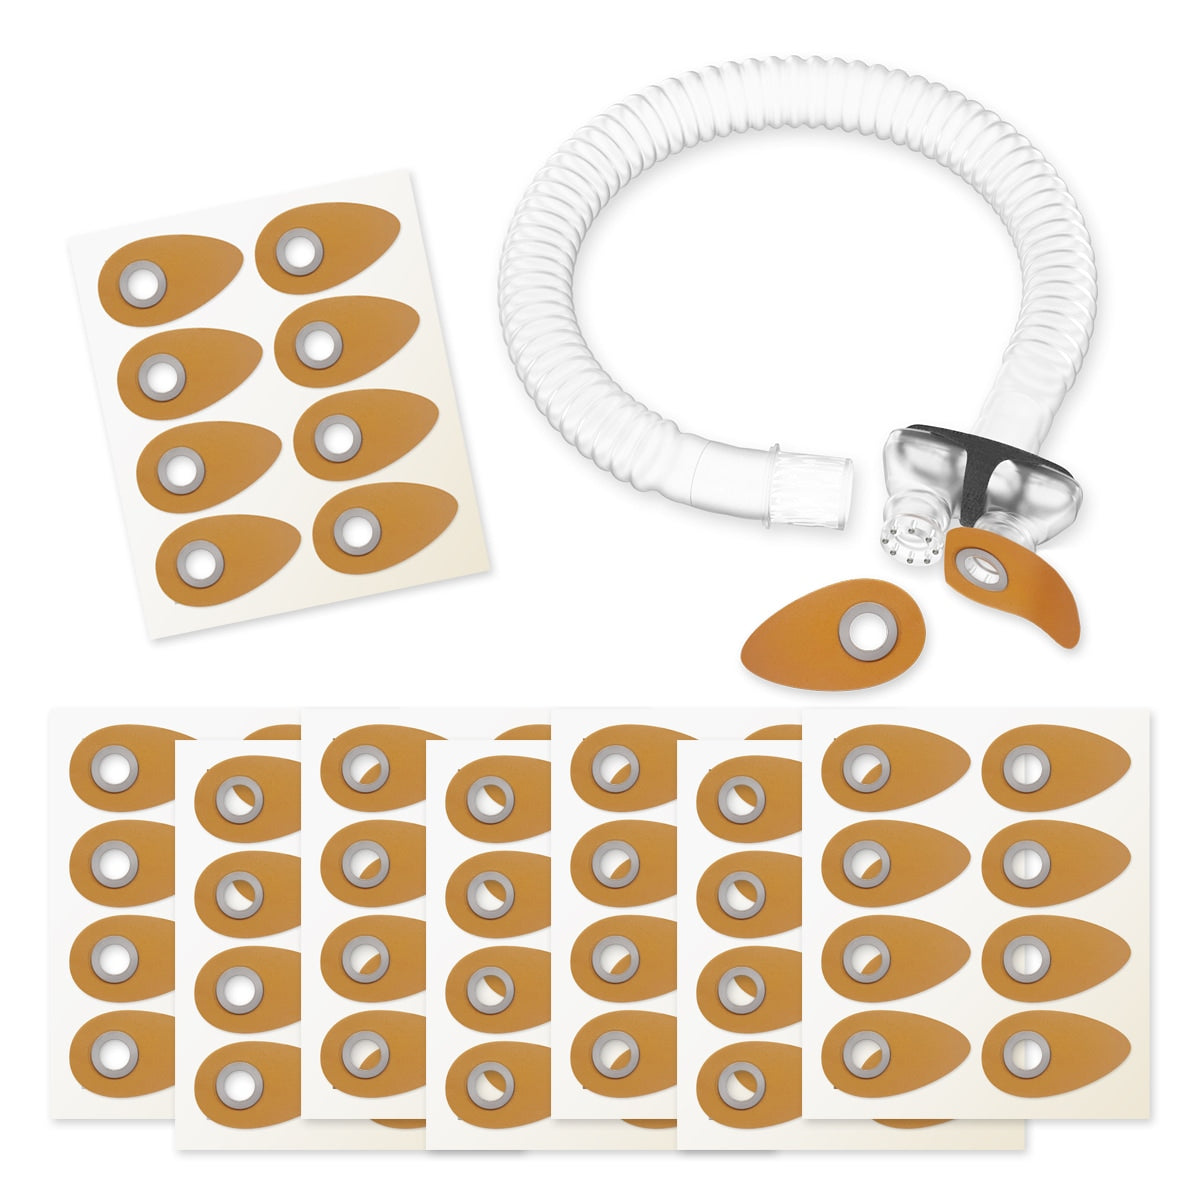 Bleep Eclipse™ CPAP Mask - Starter Kit